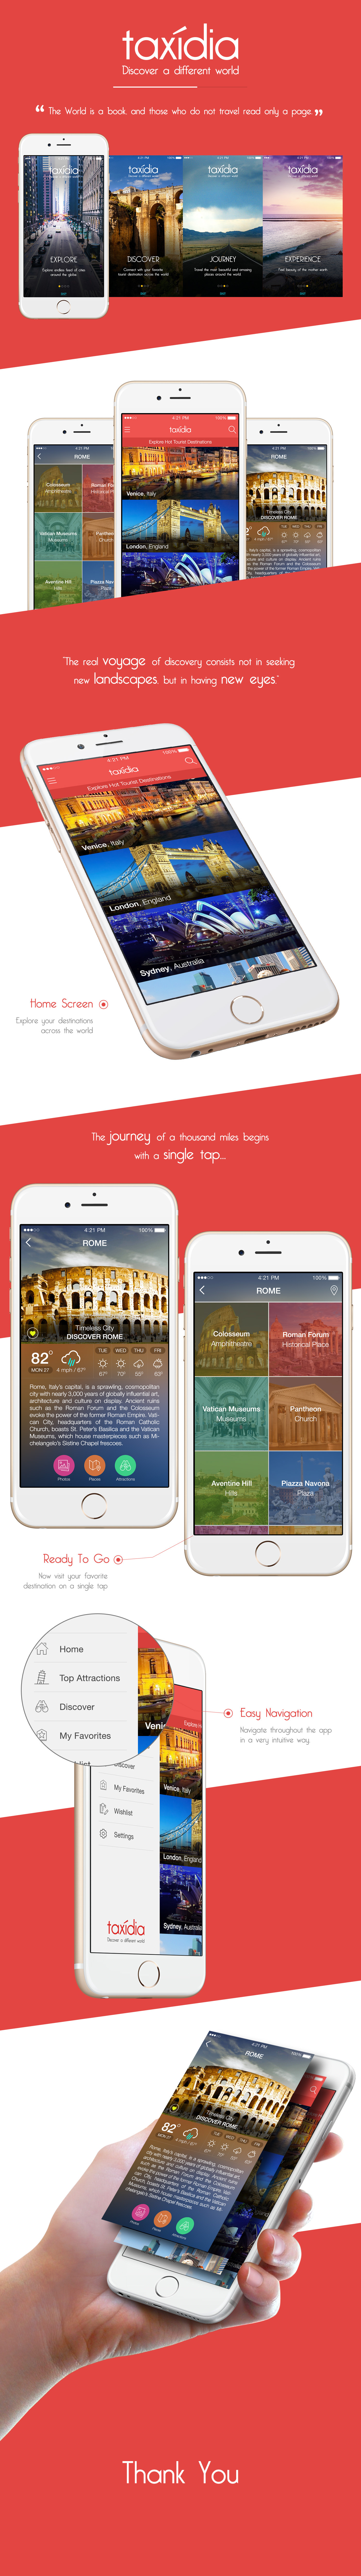 destinations tourist traveller UI iphone app journey discover Travel ios7 flat design concept travel guide Travel App search places